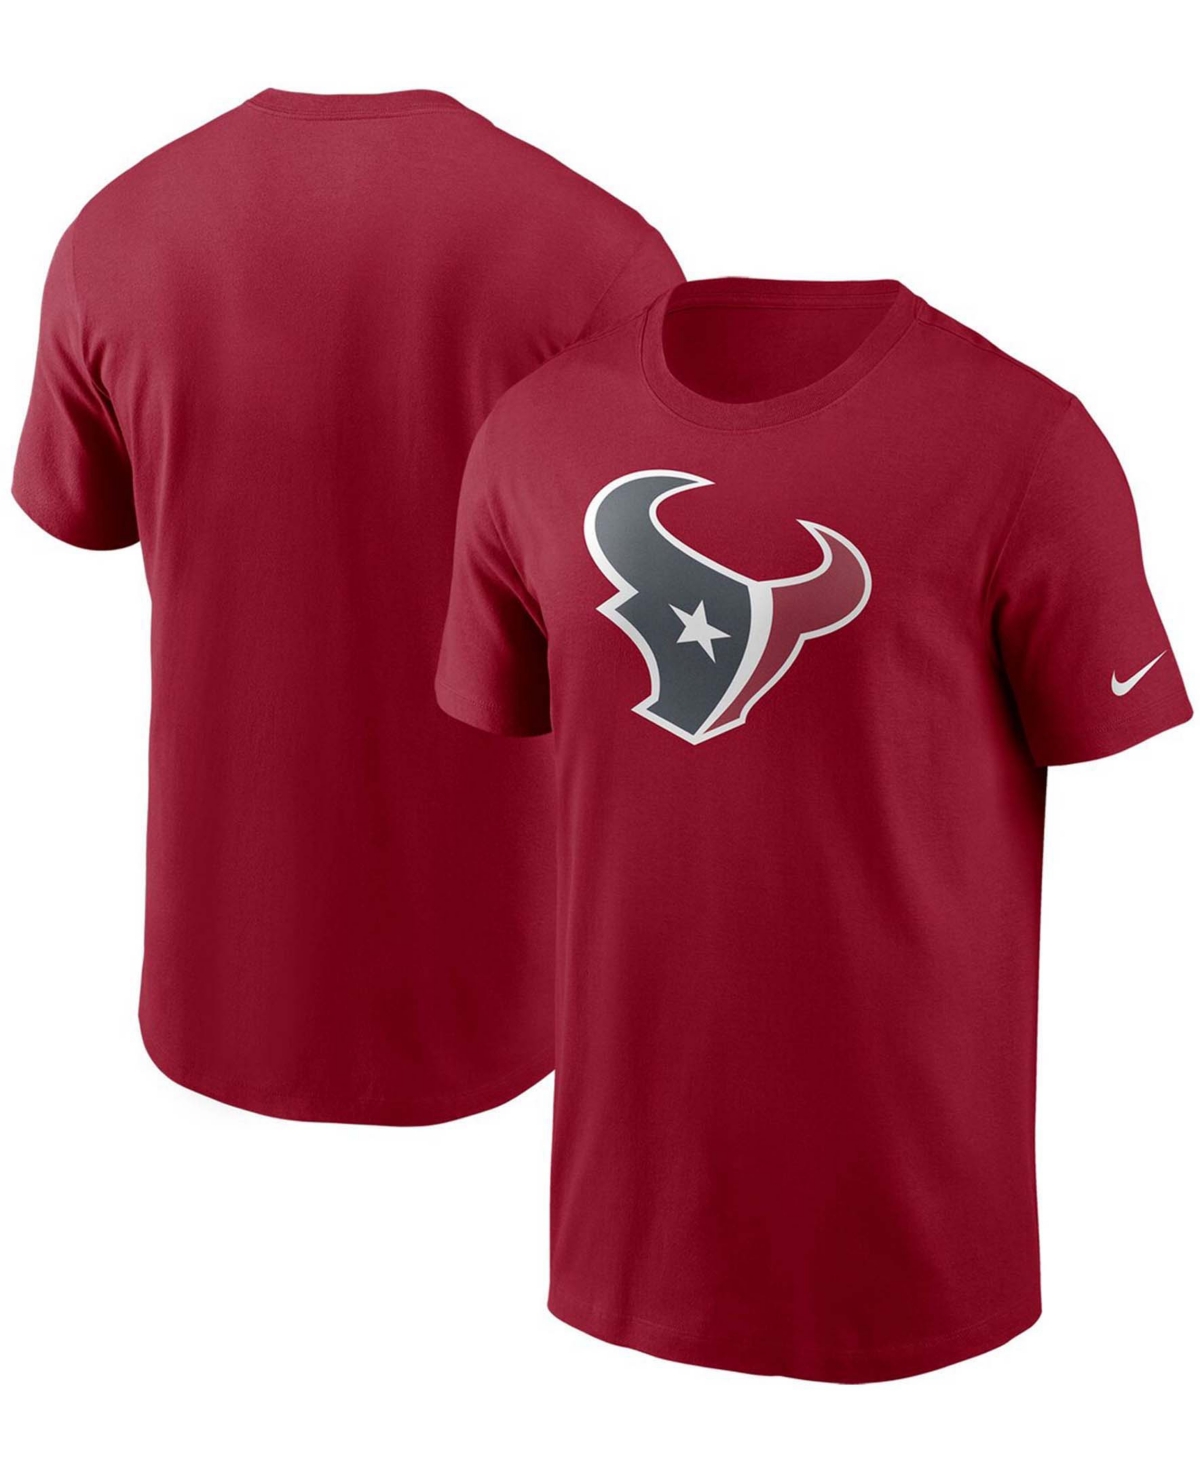 Nike Men's Red Houston Texans Primary Logo T-shirt